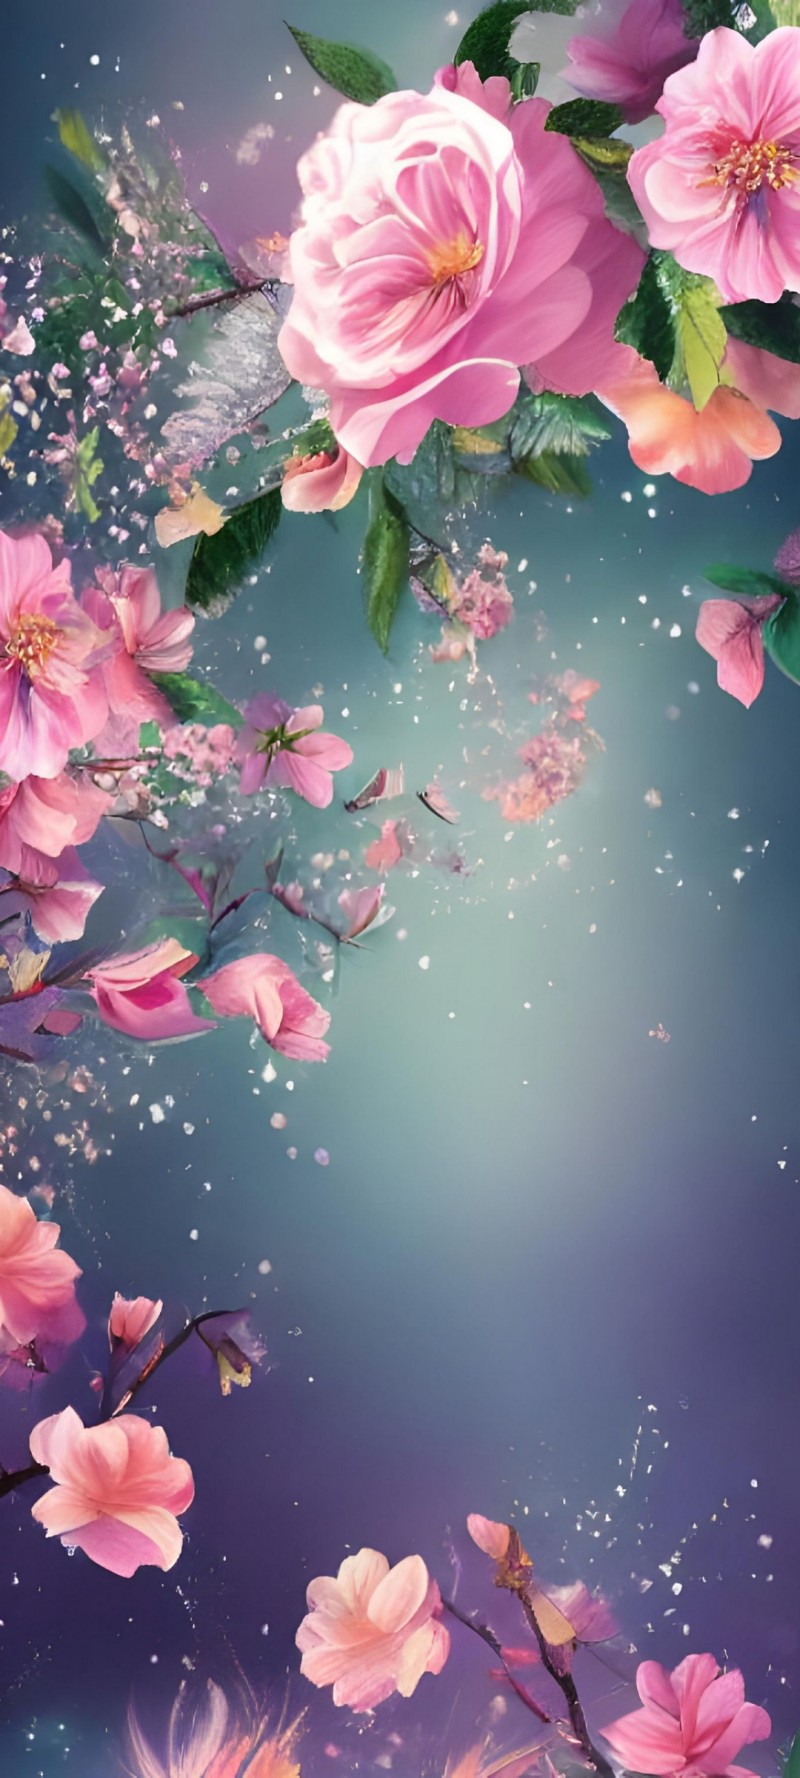 download spring wallpaper - 1080x2400.jpg